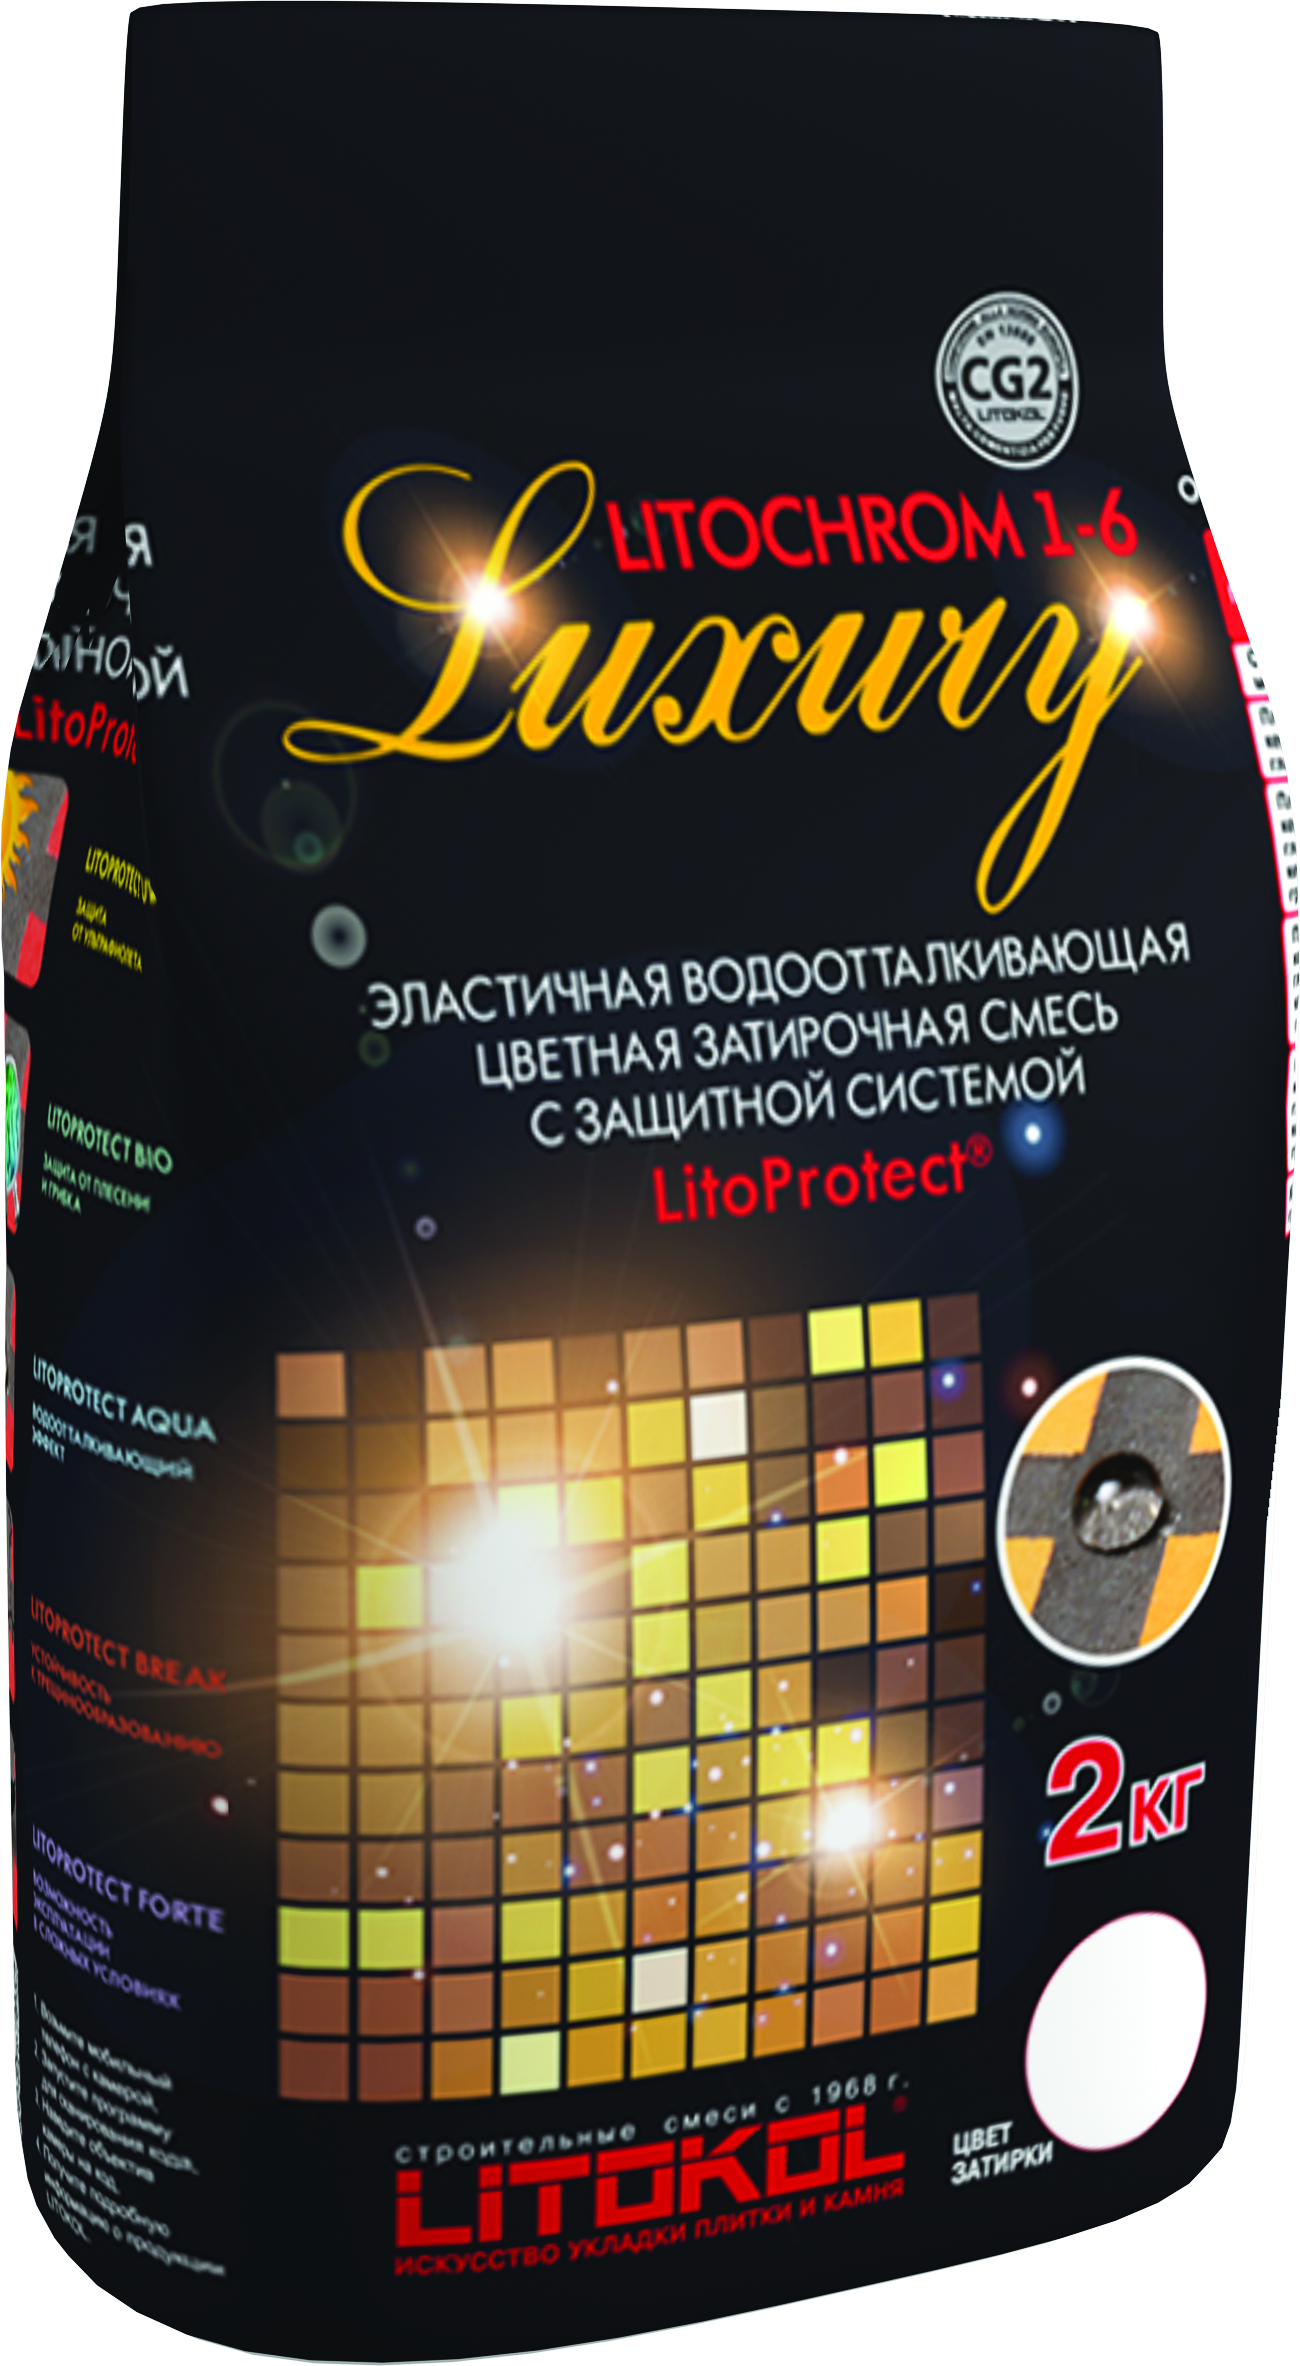 Купить Litokol Litochrom 1-6 Luxury C.180, 2 кг